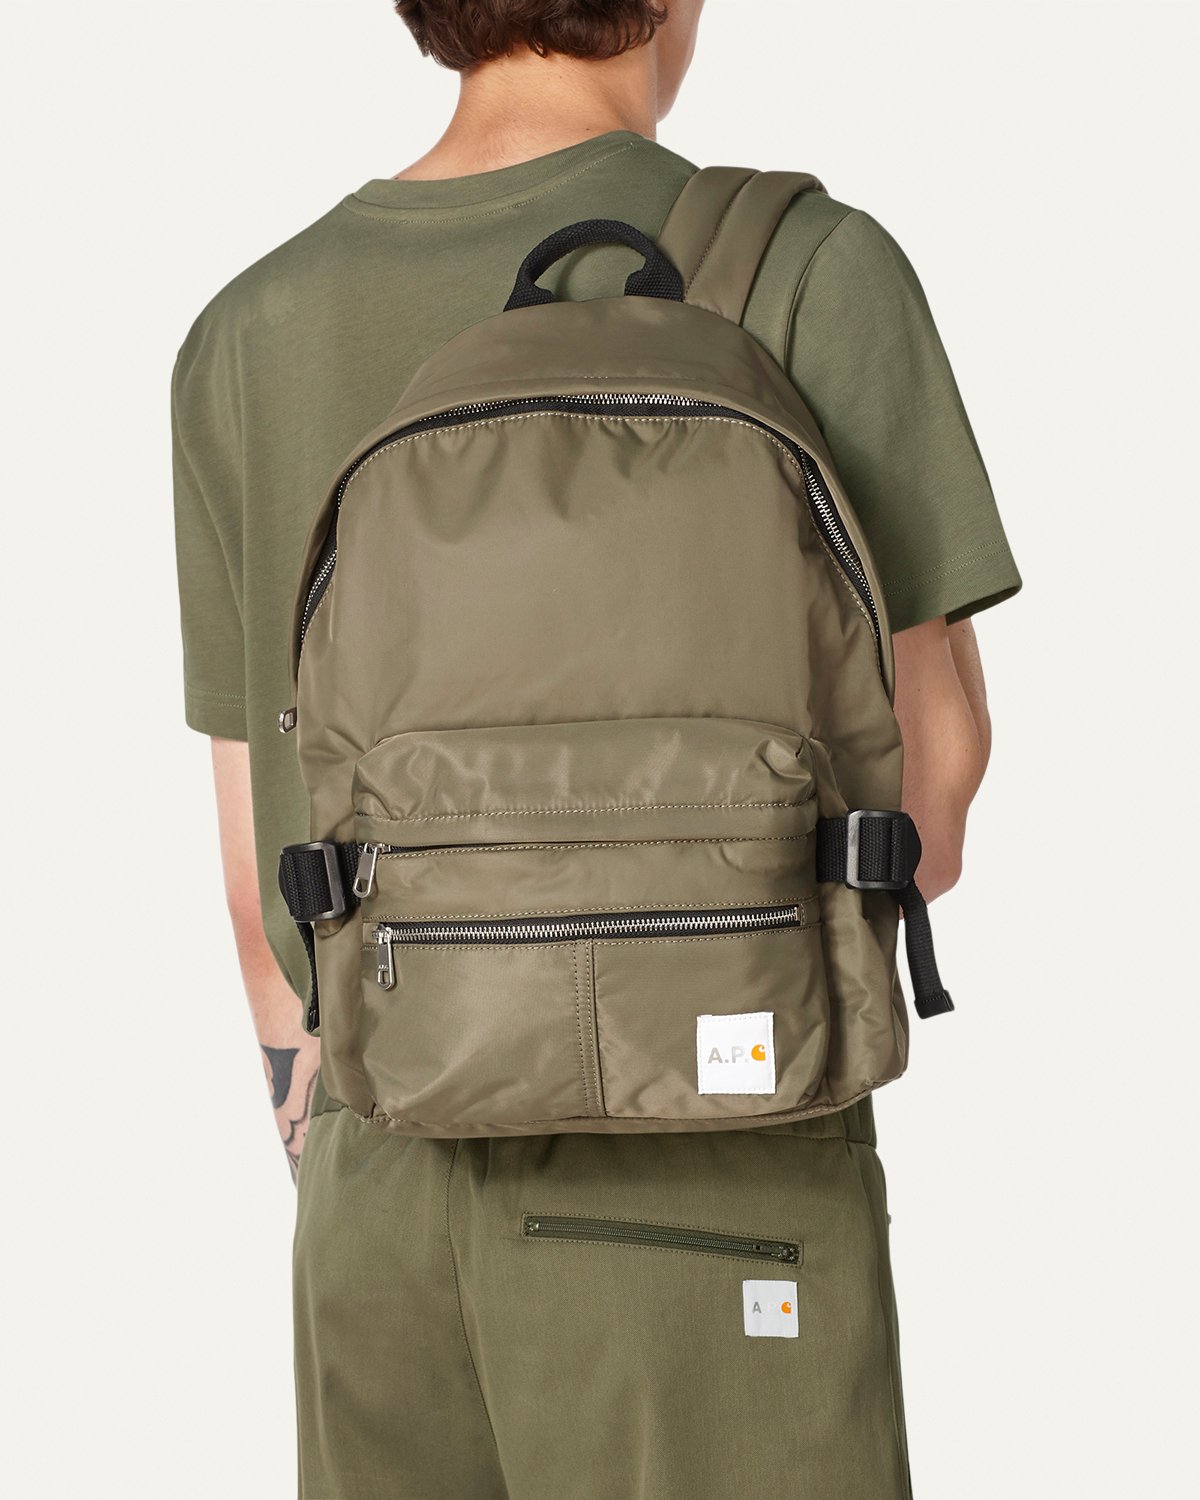 A.P.C. x Carhartt WIP - Shawn Backpack Khaki - Accessories - Green - Image 2